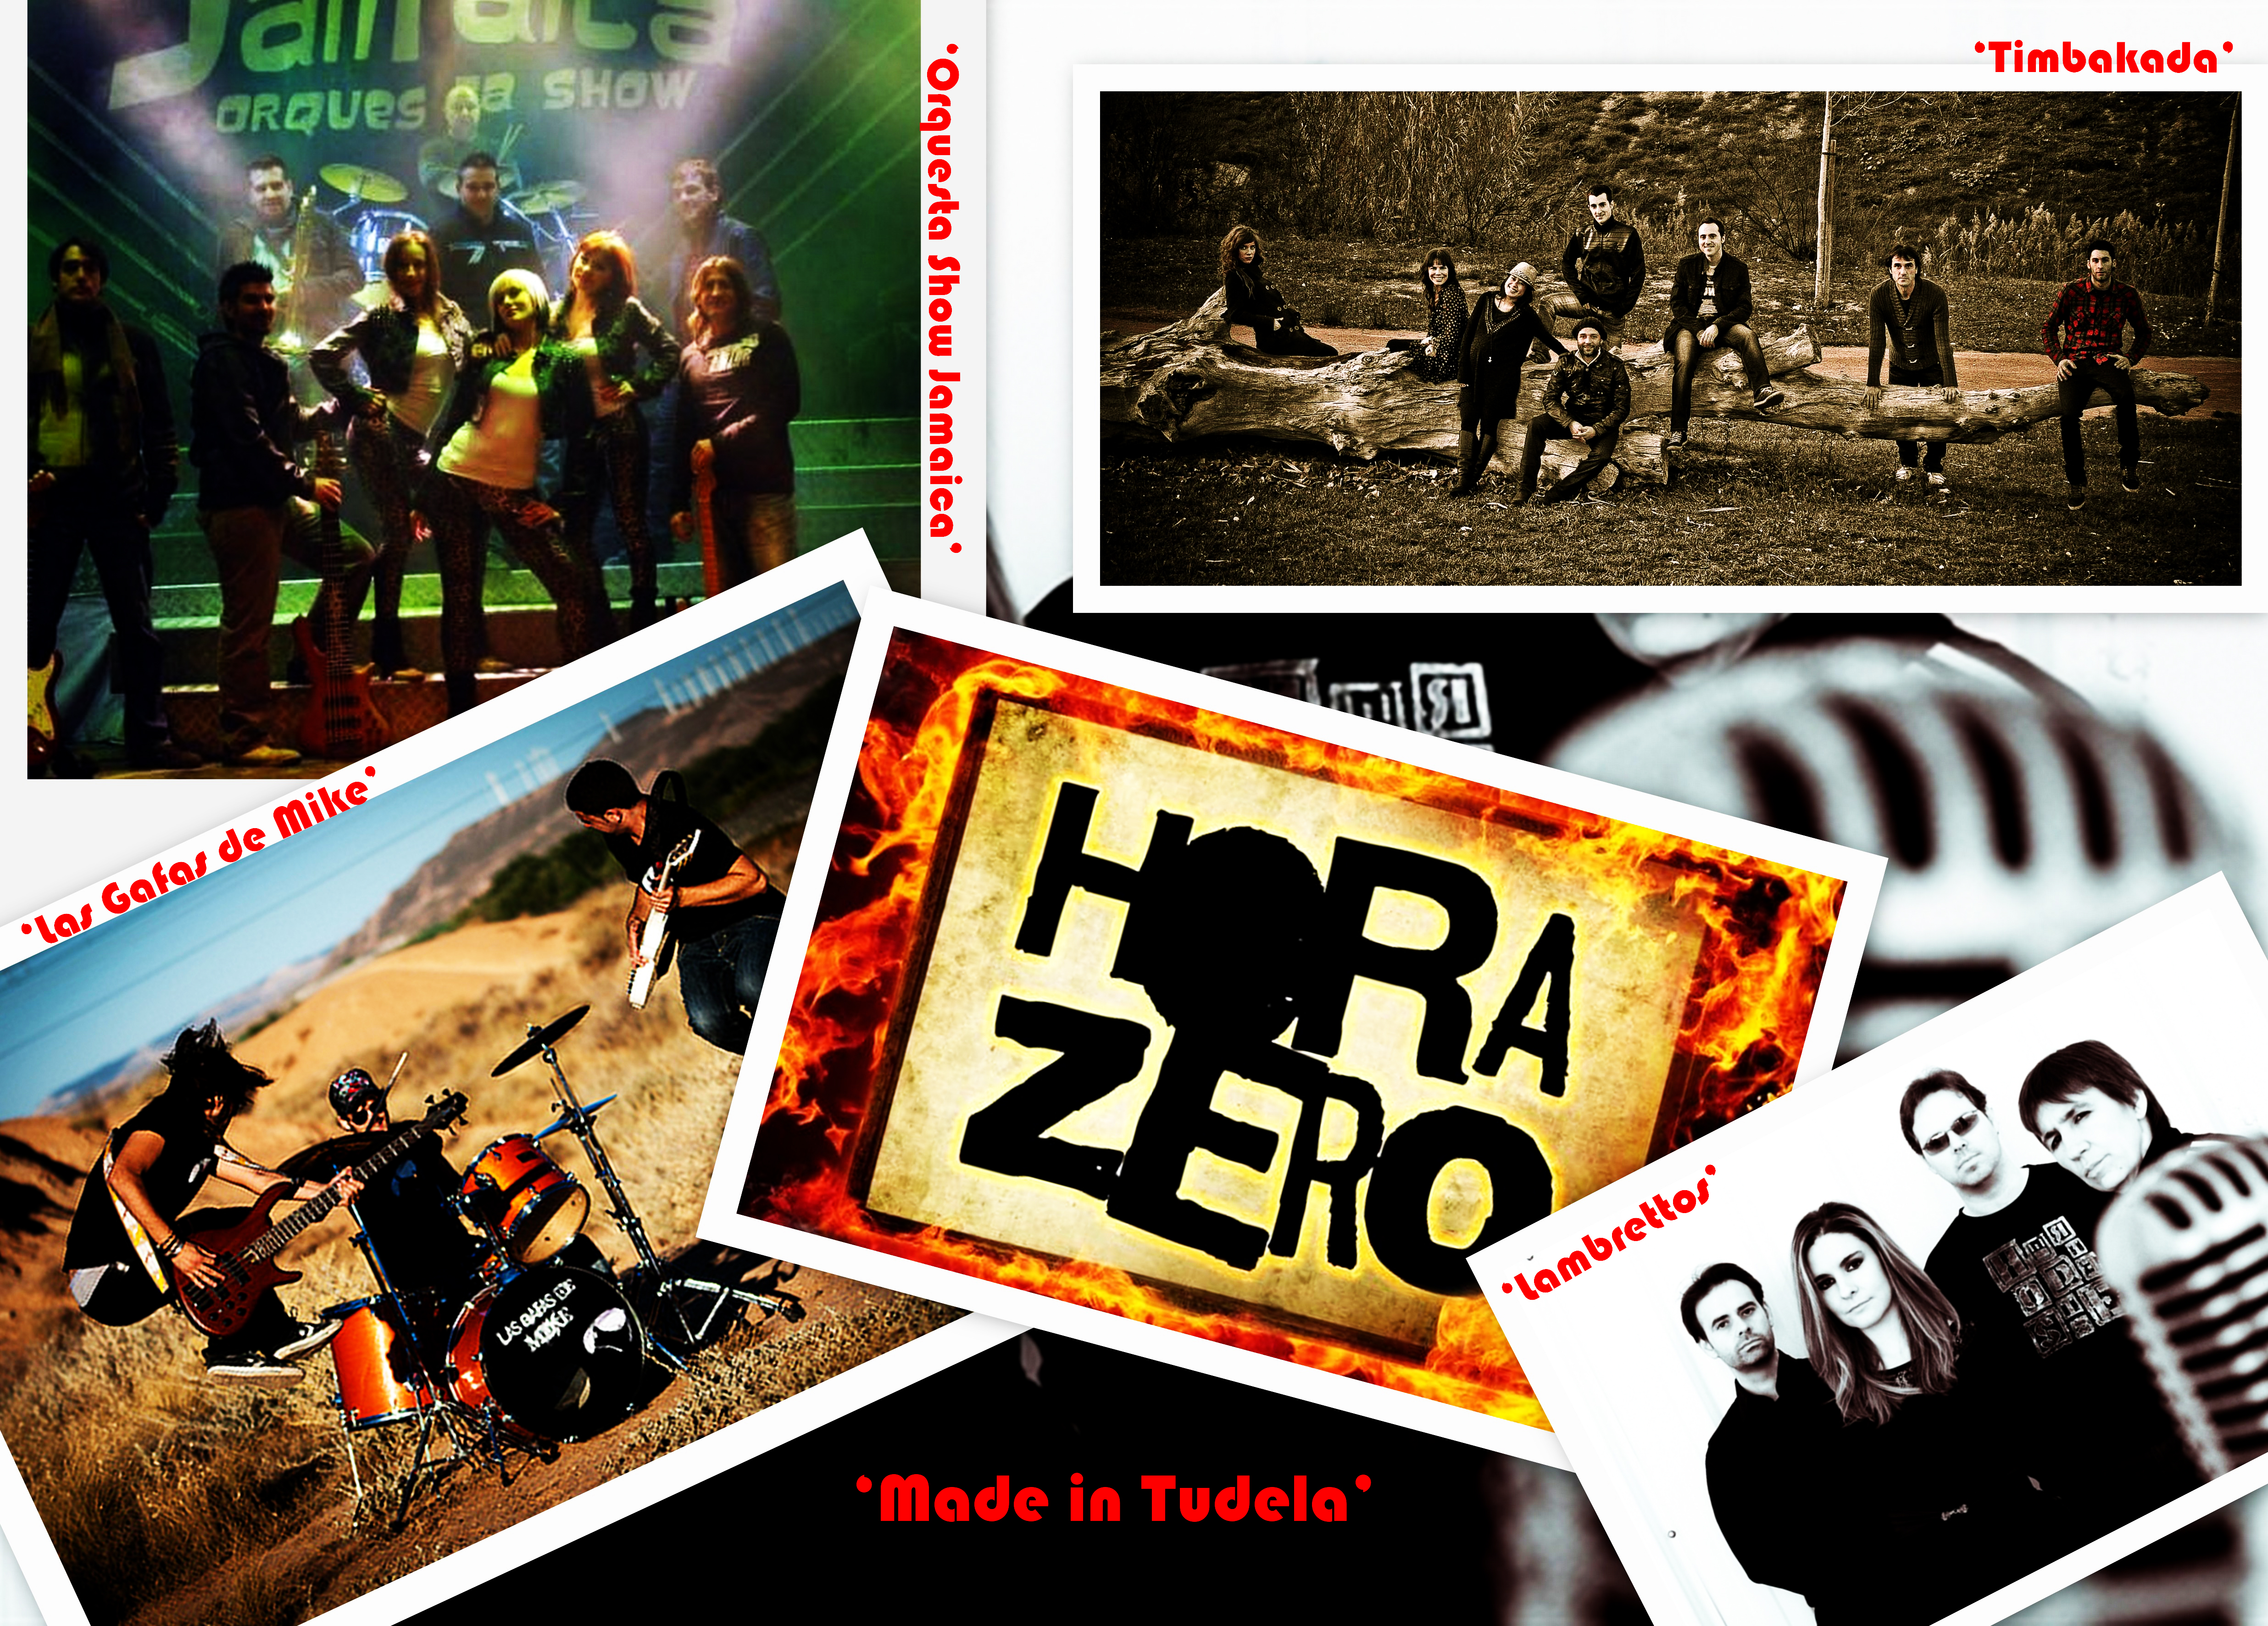 Grupos de música 'made in Tudela'